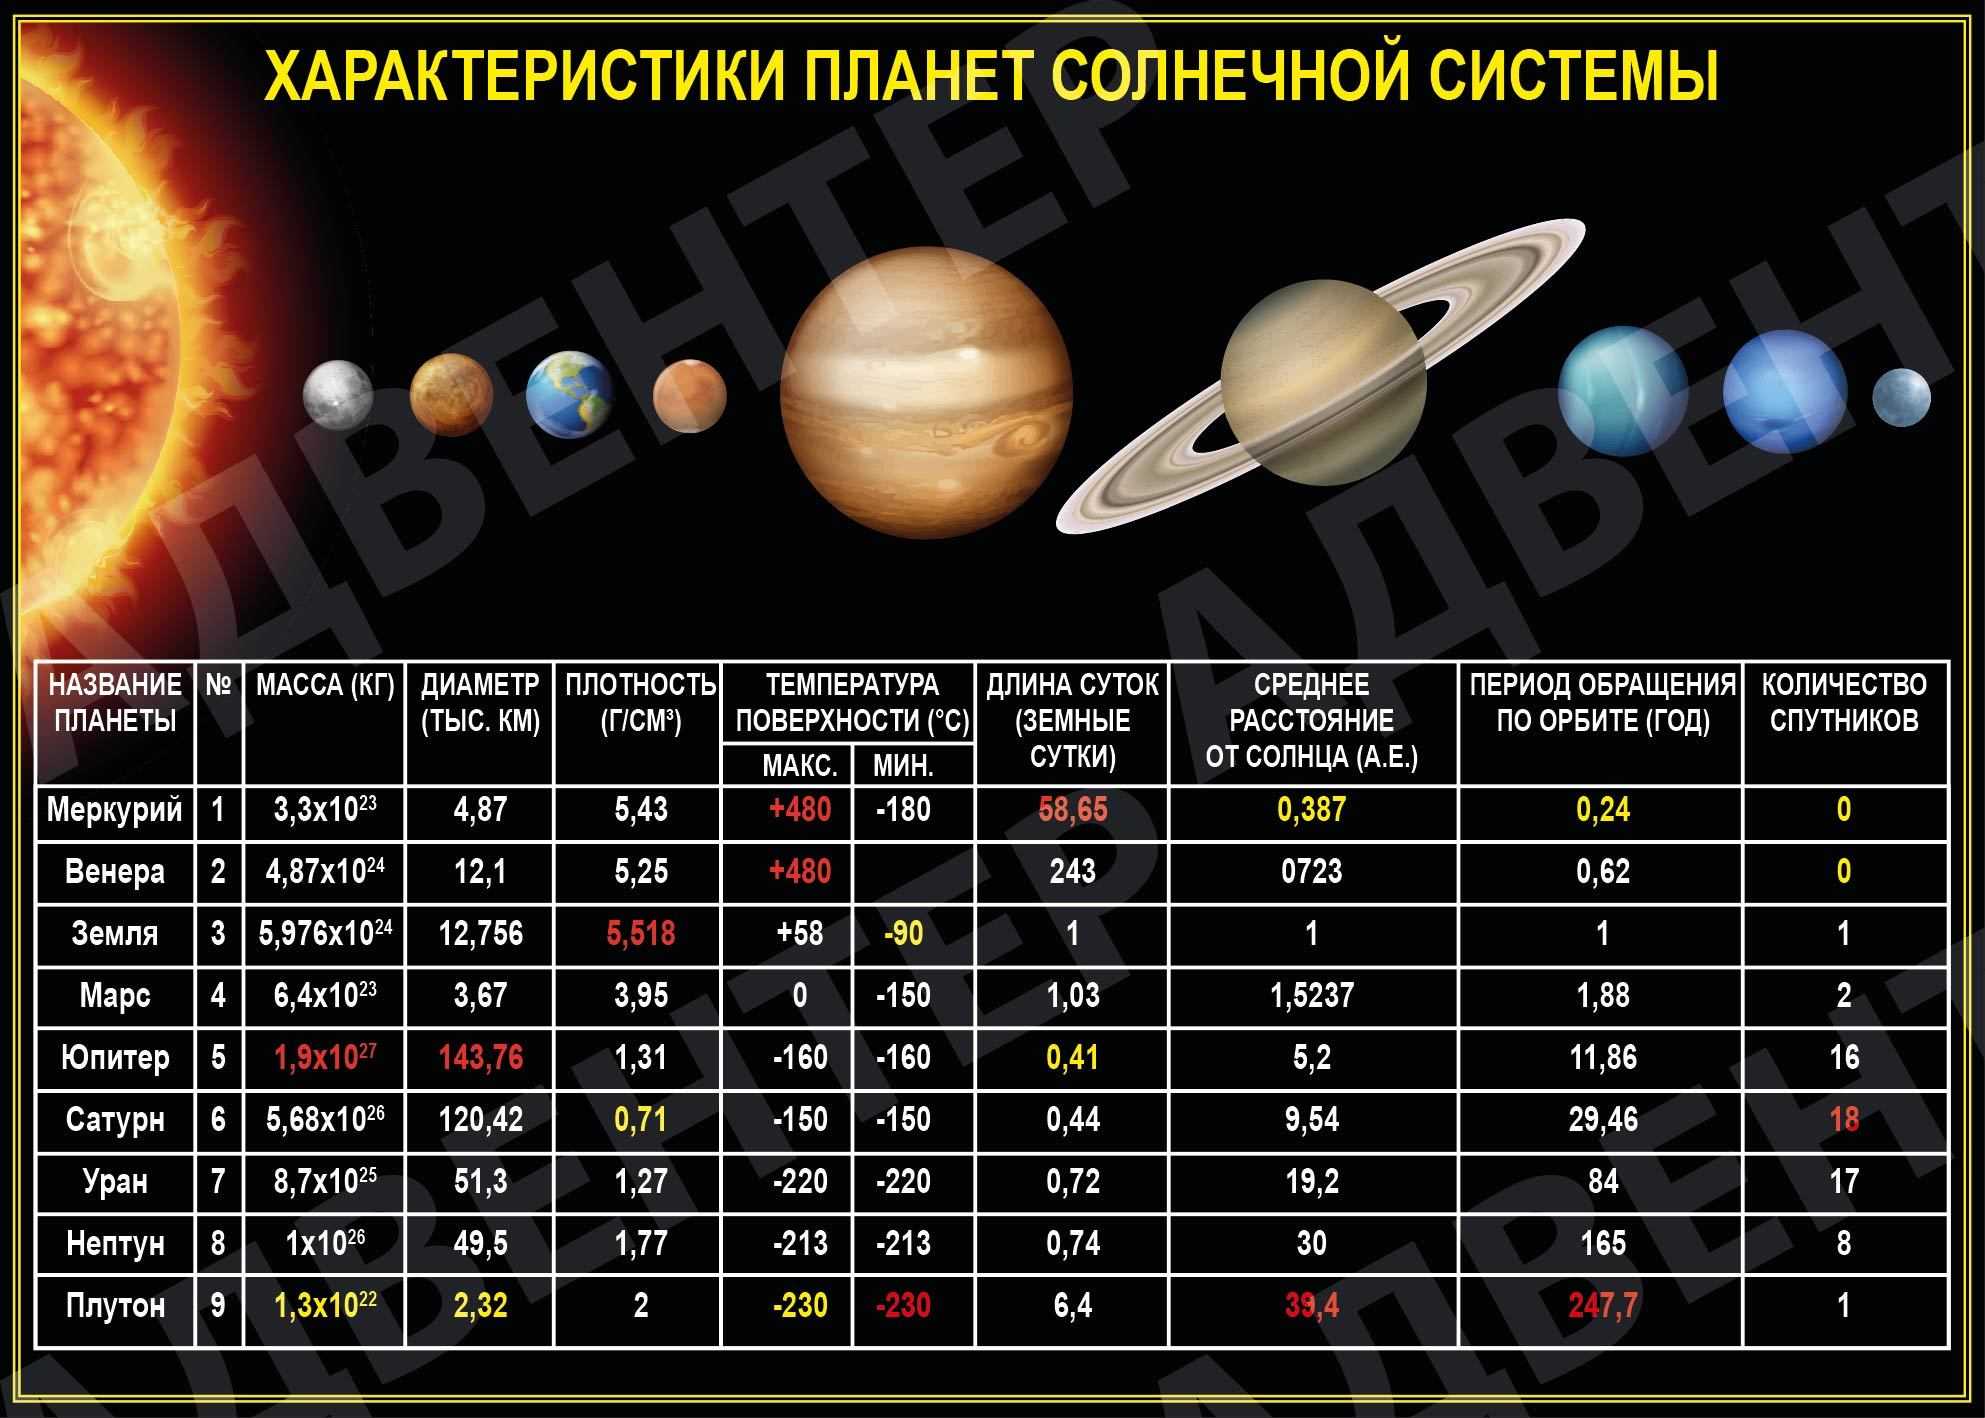 Официальная наука о влиянии солнца и планет через солнце - 15 декабря 2012 – земля - хроники жизни